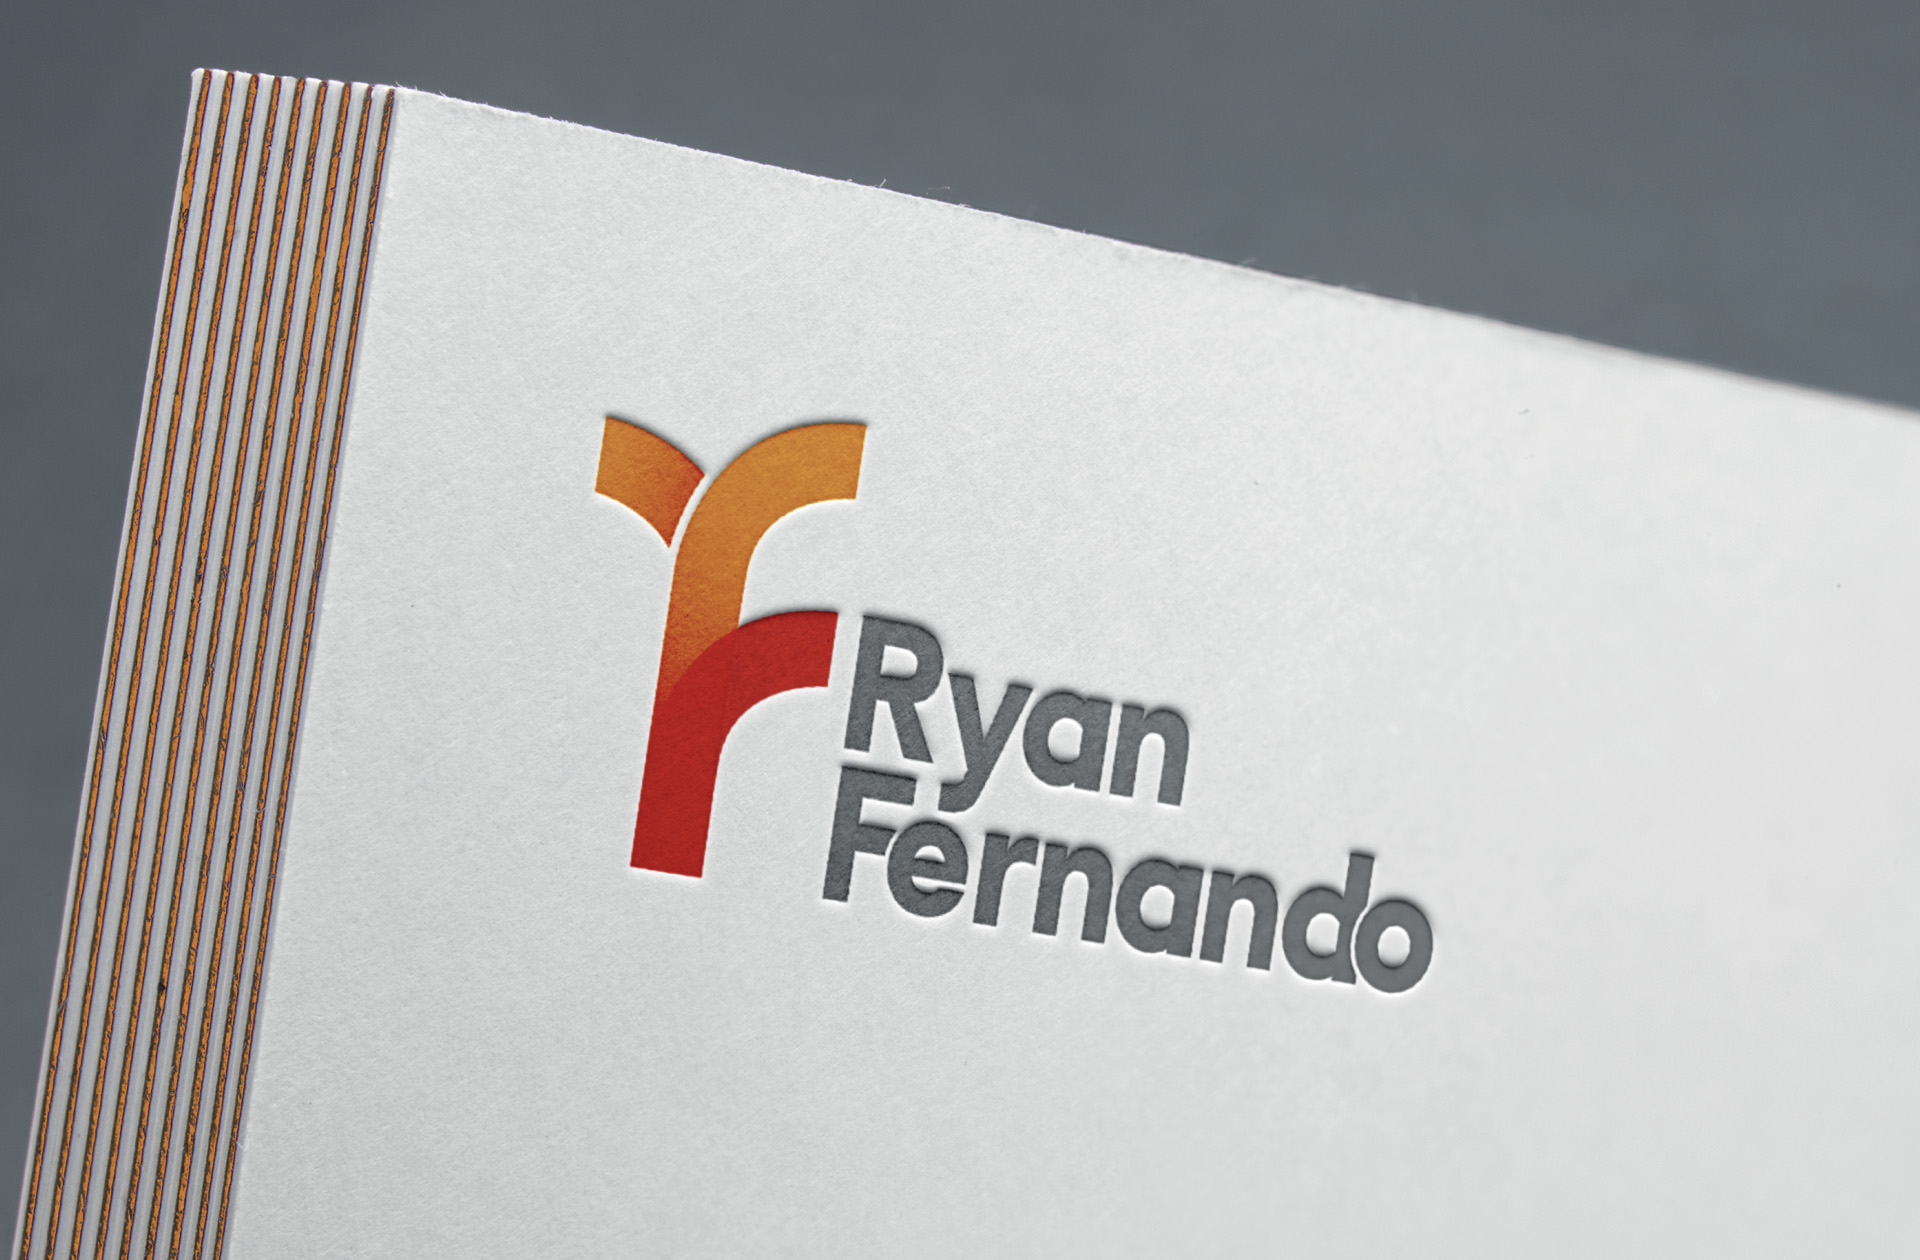 Ryan Fernando